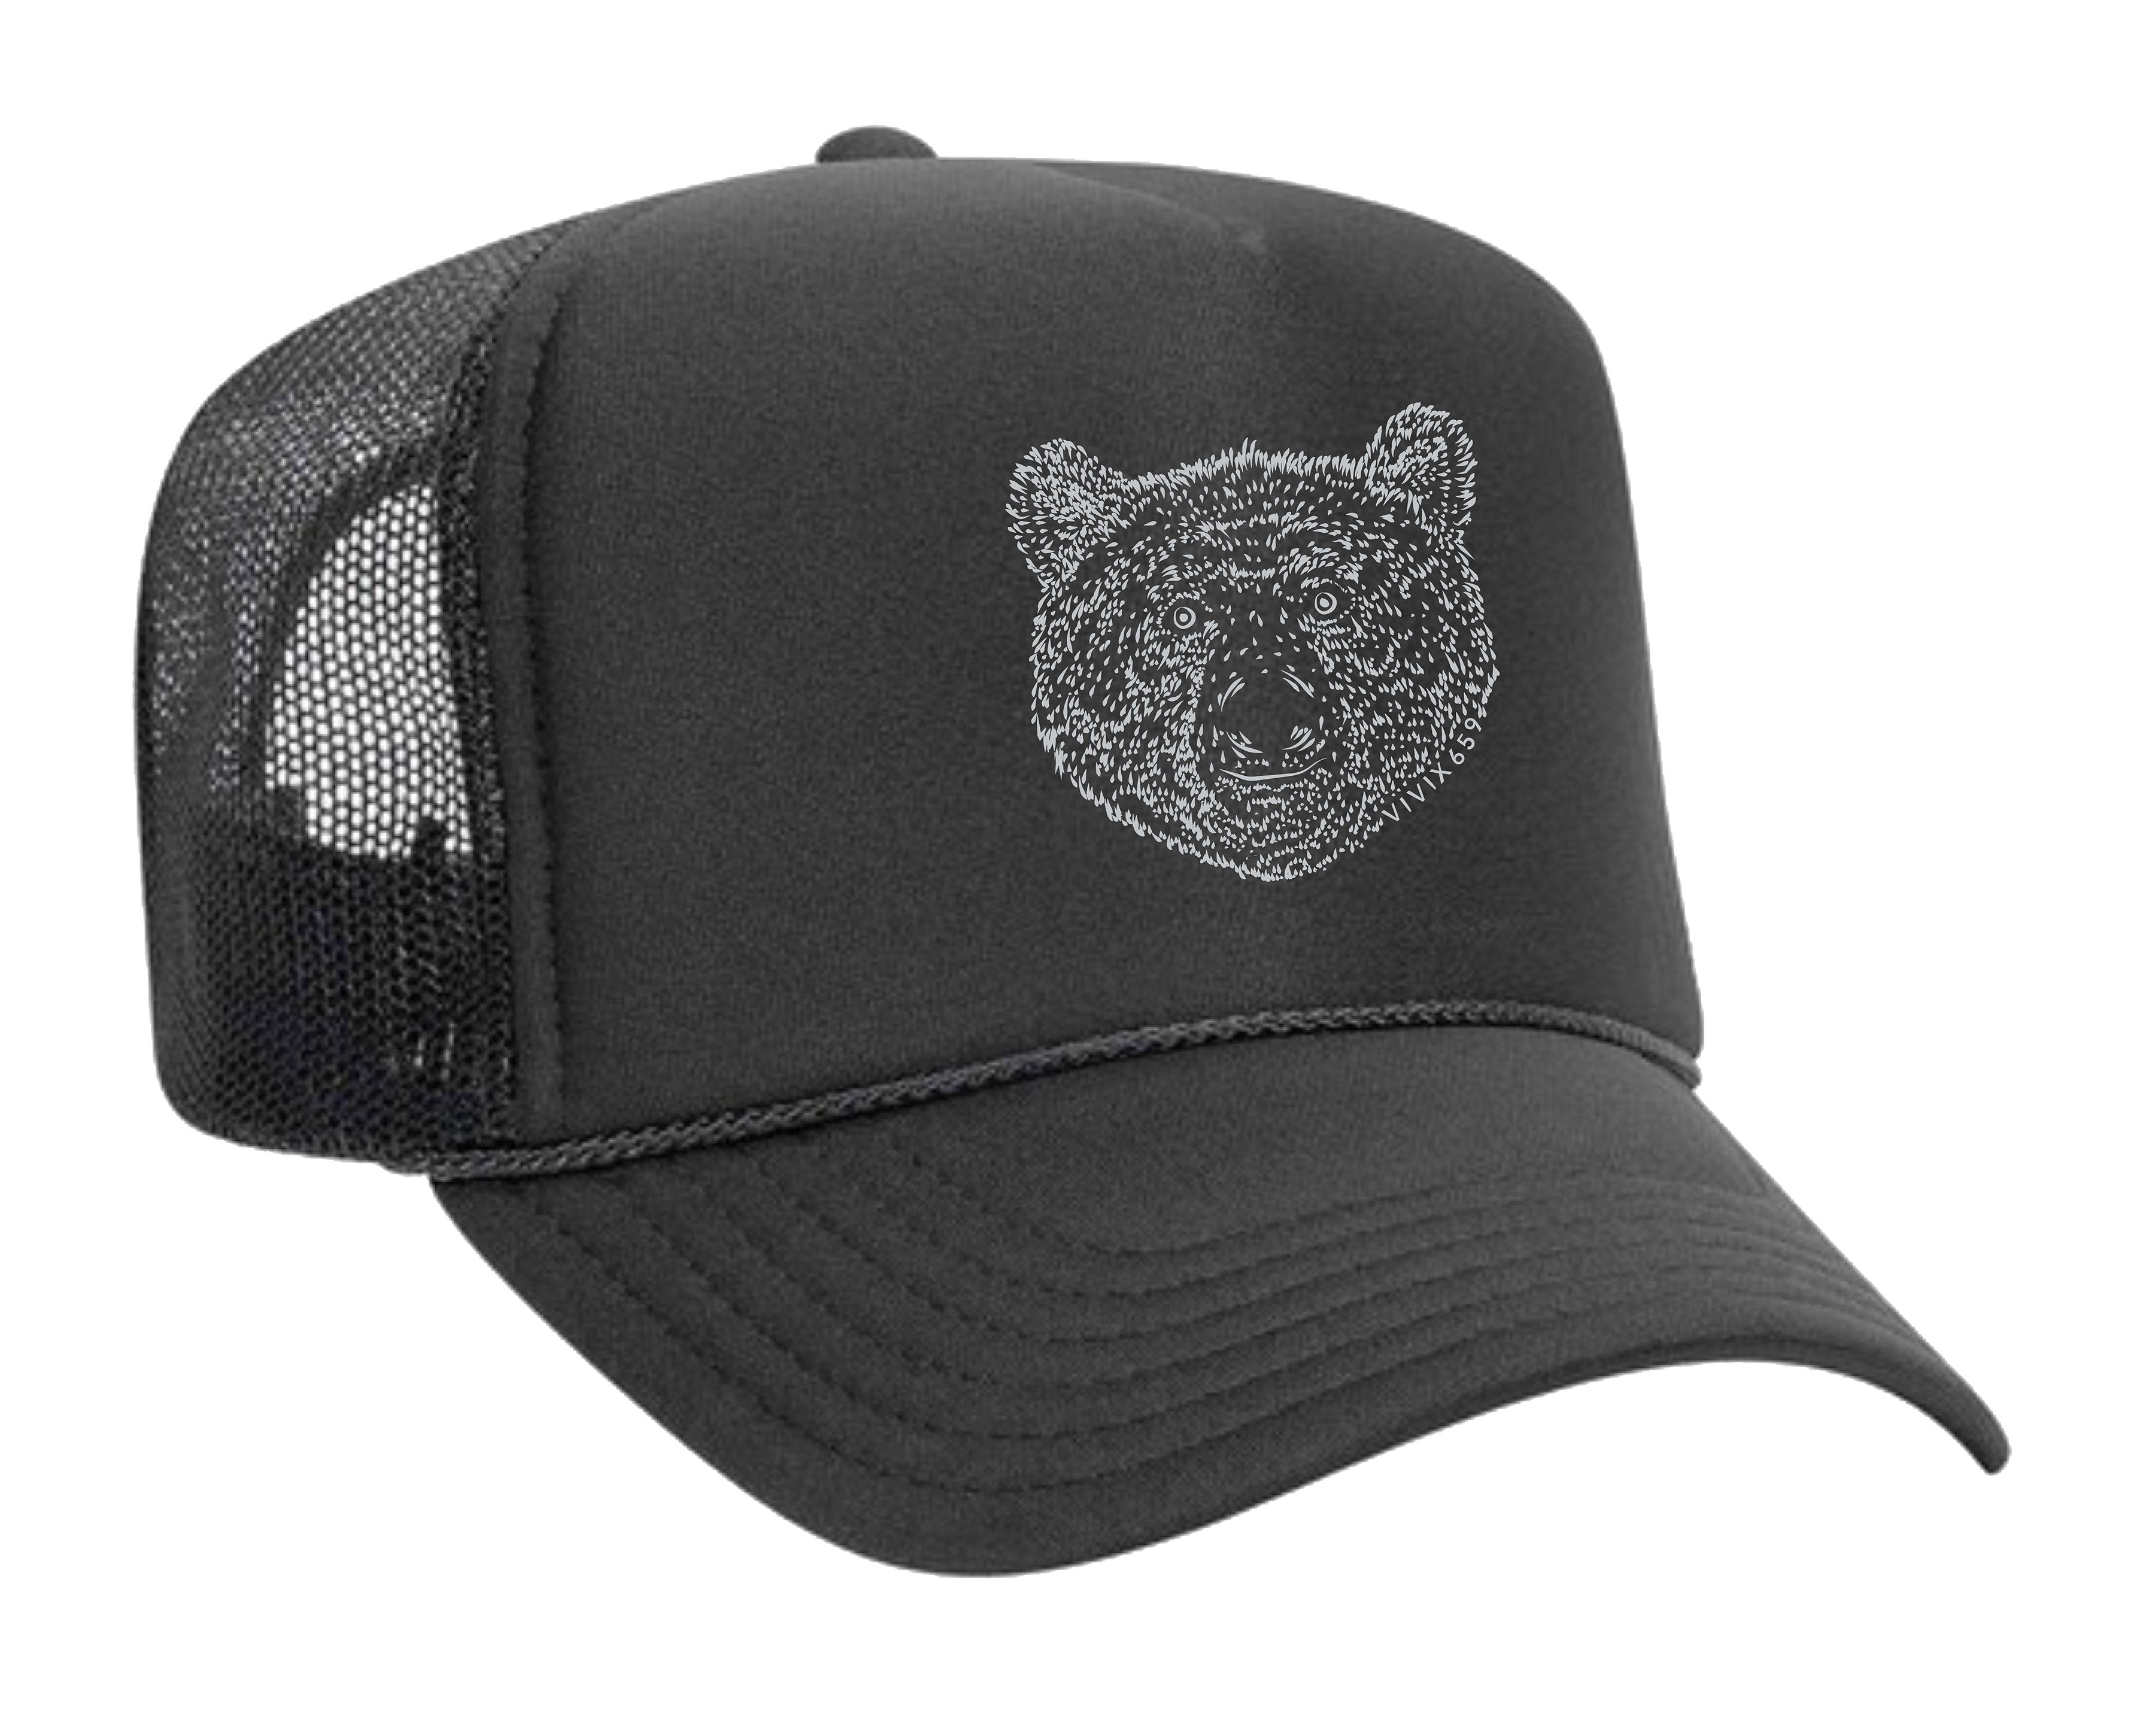 Vivix 659 Brand: Unisex Graphic California Bear Embroidered Mesh Hat